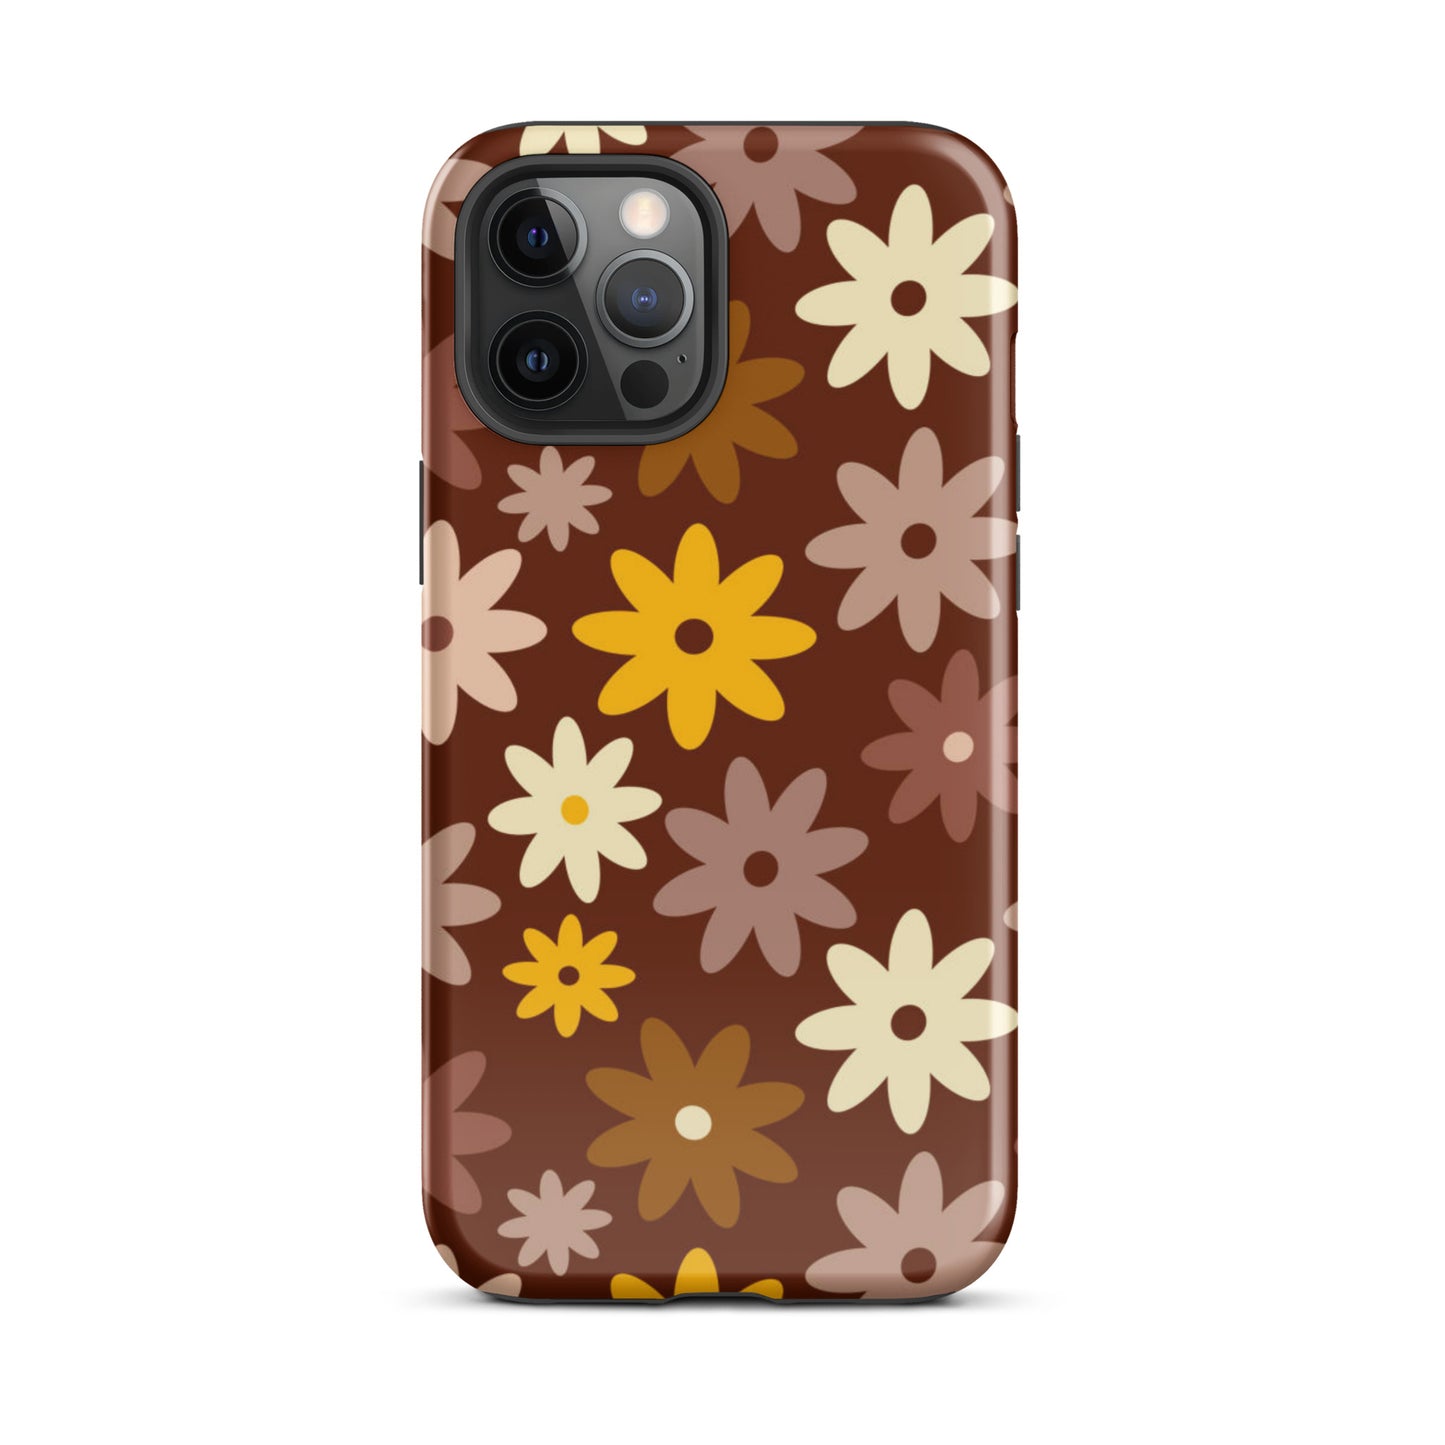 Retro Garden iPhone Case iPhone 12 Pro Max Glossy